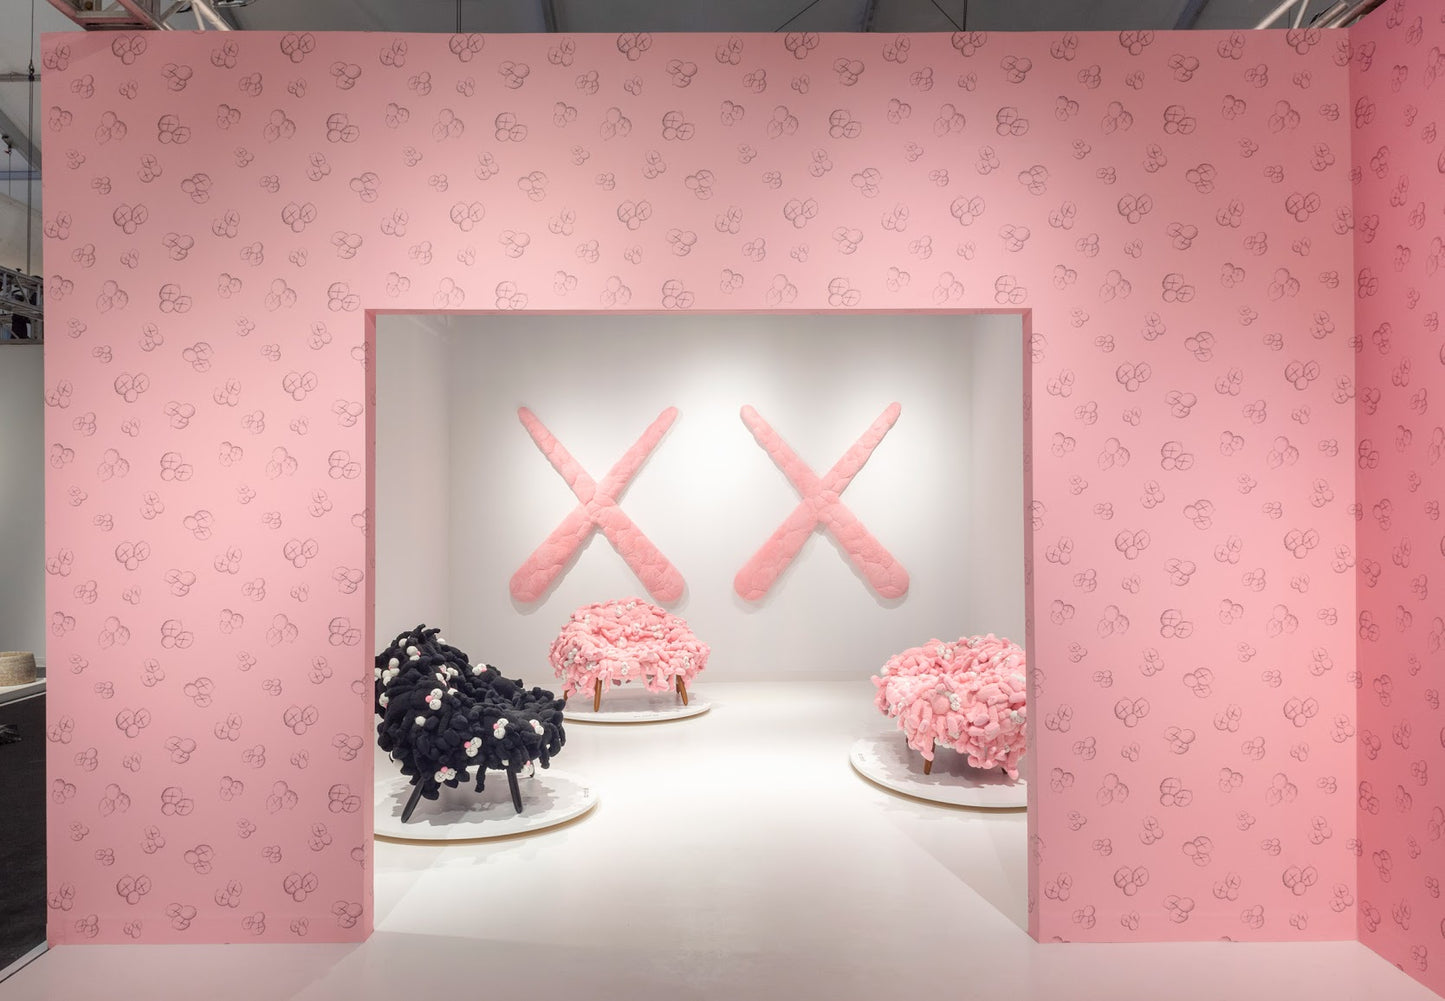 KAWS x Campana Plush Sofa "Pink"